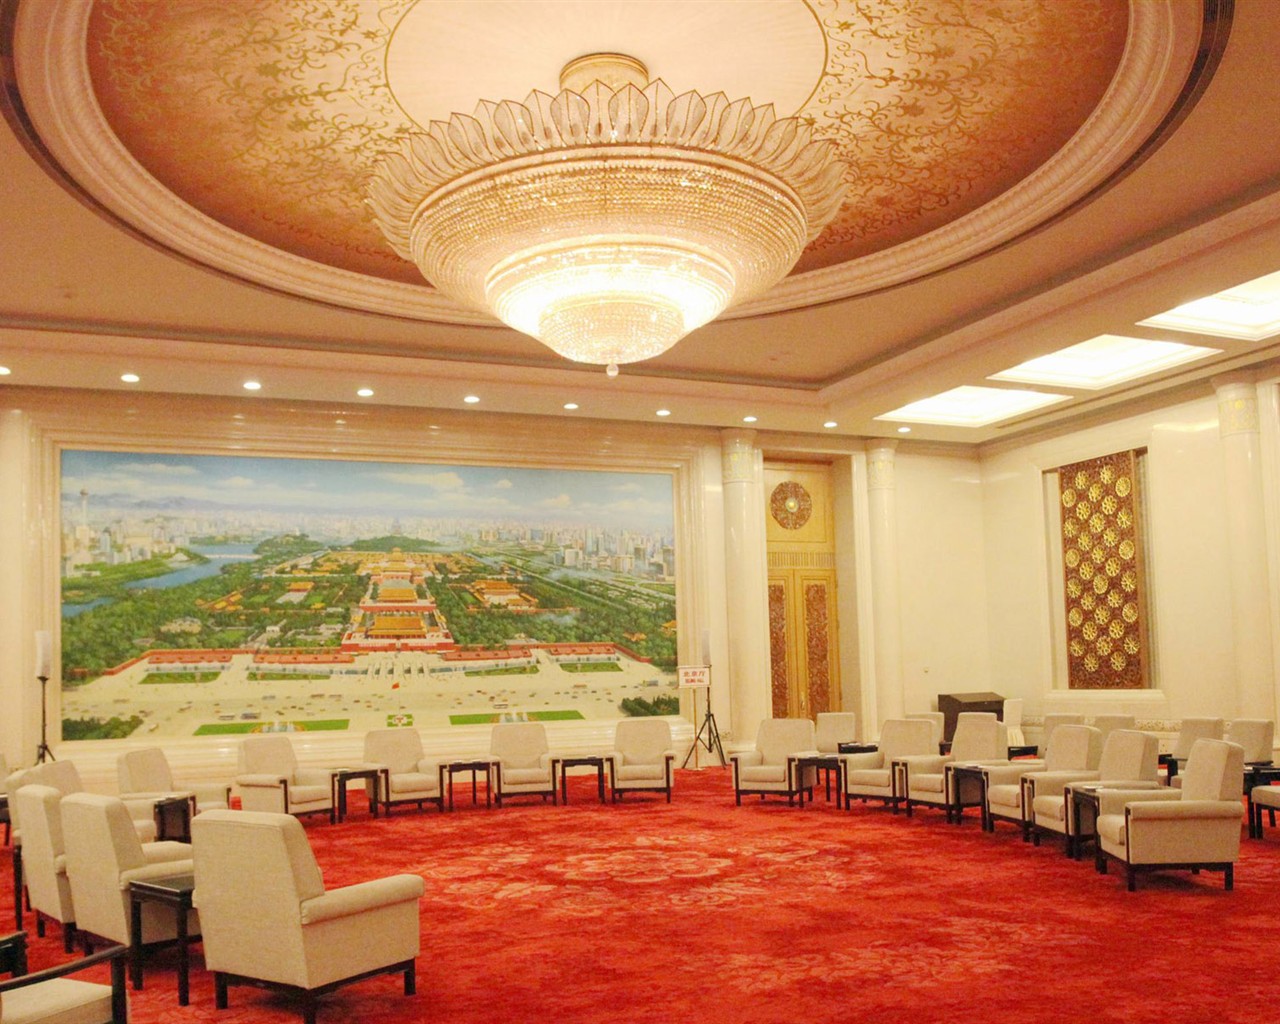 Beijing Tour - Great Hall (ggc works) #8 - 1280x1024